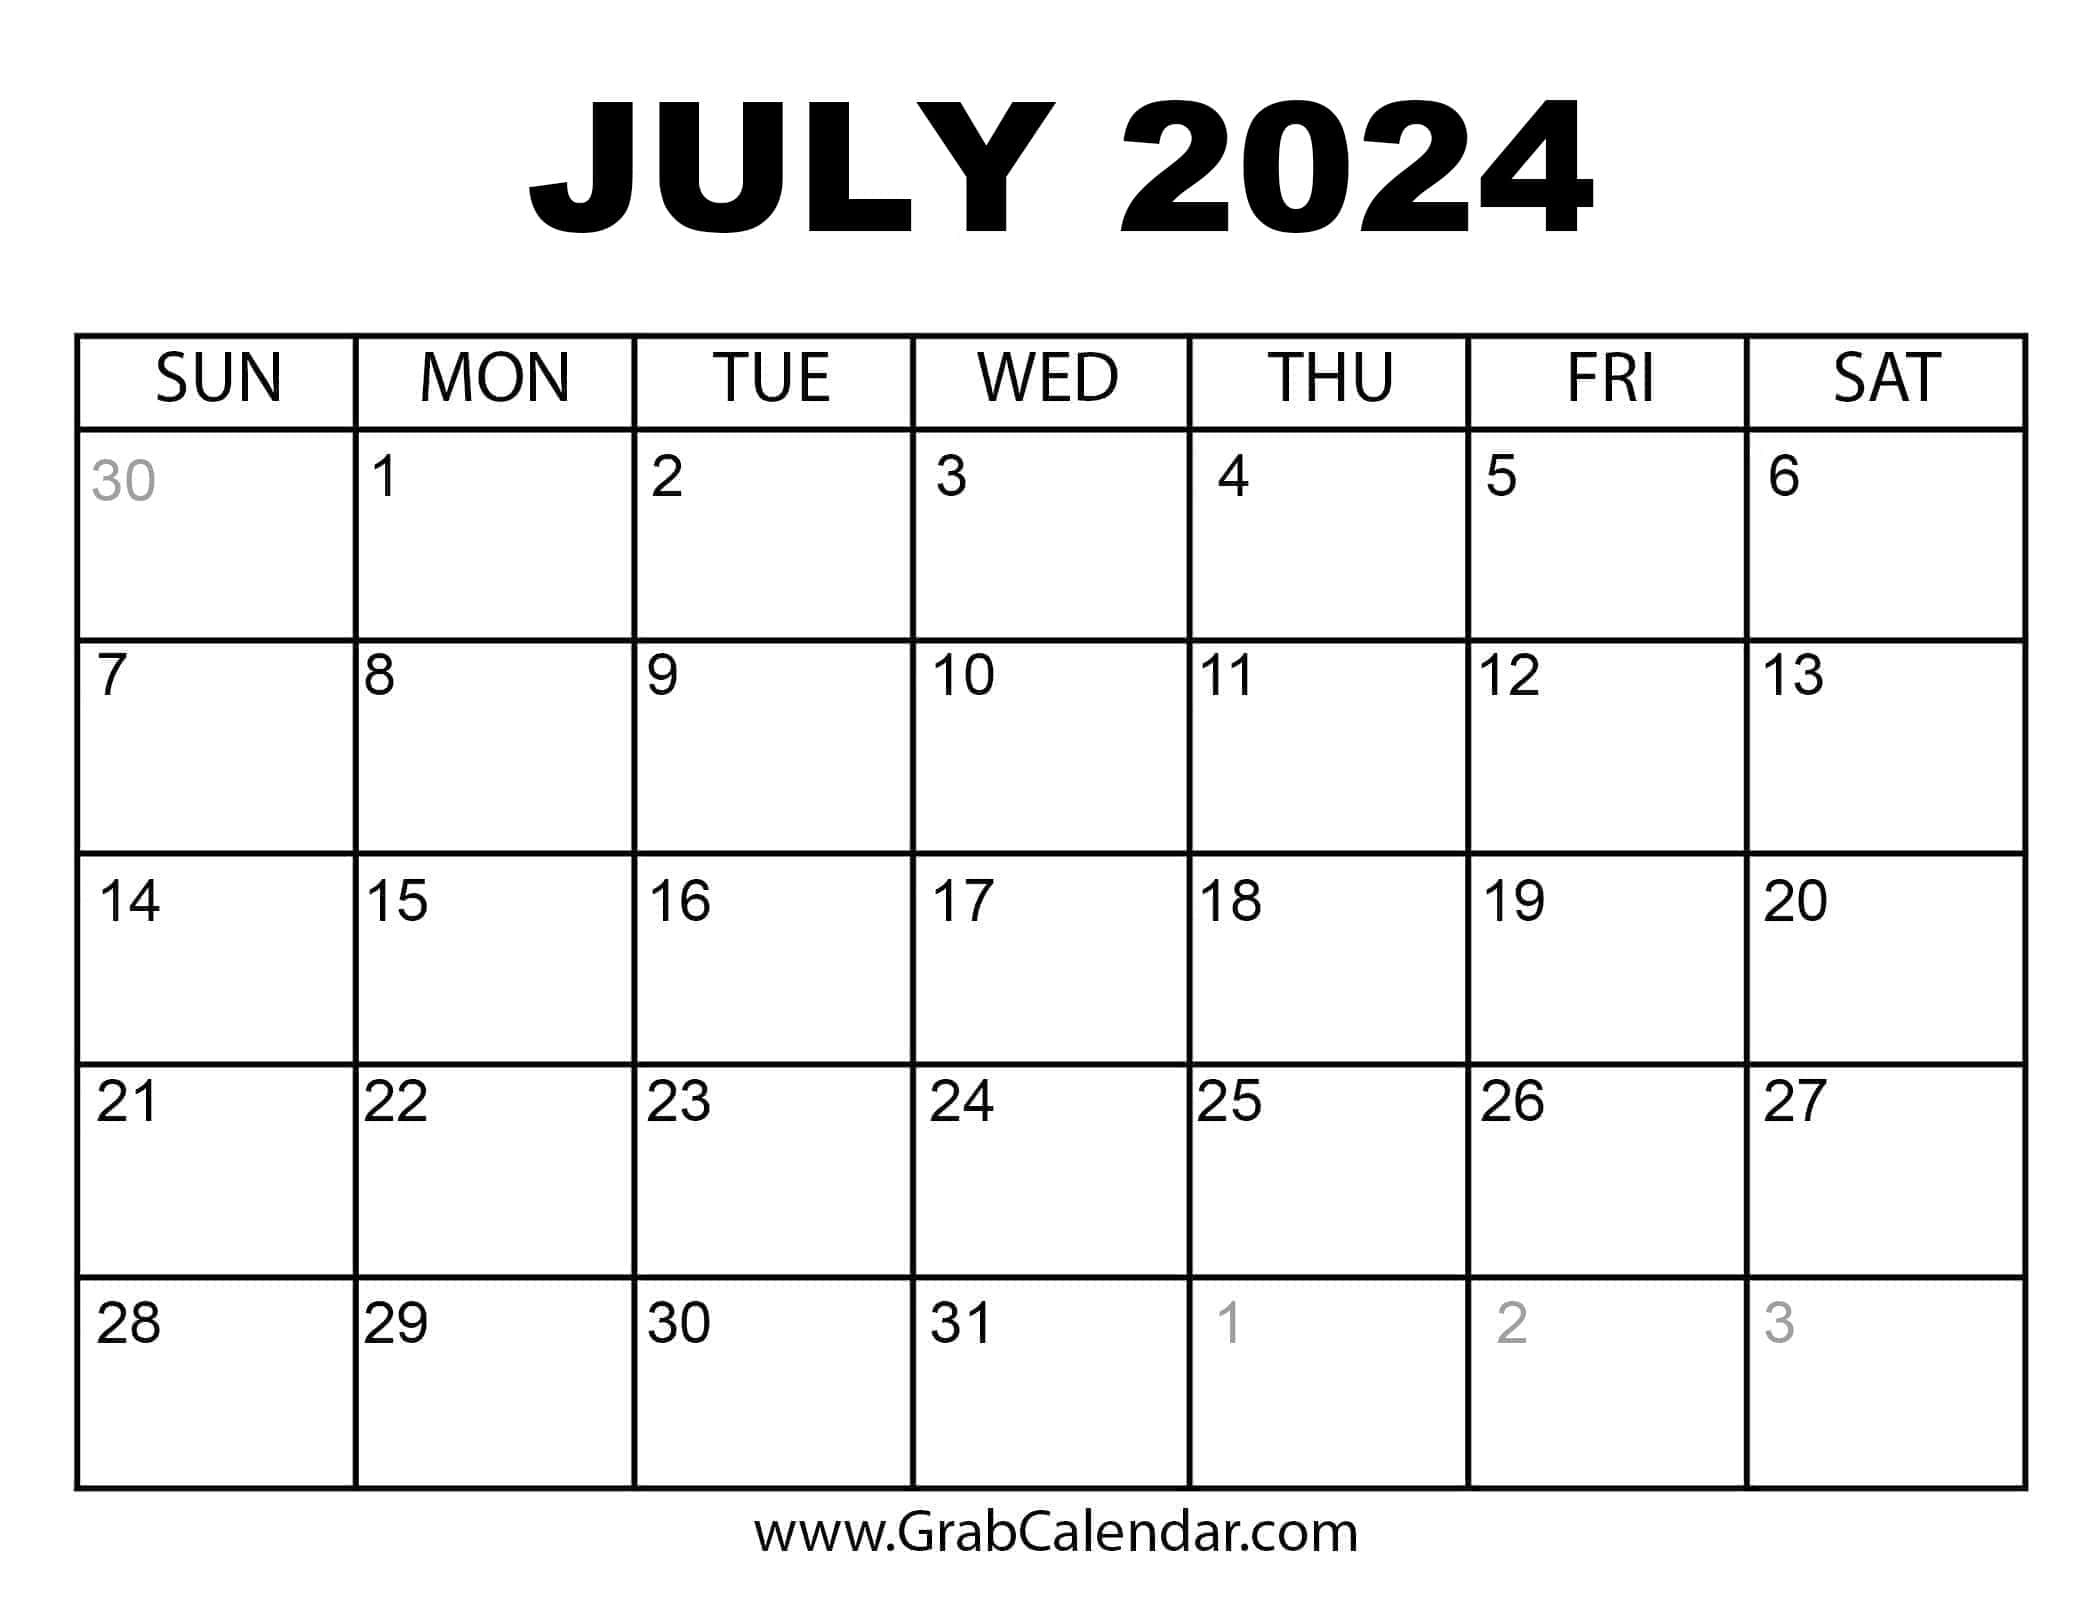 Printable July 2024 Calendar within July 2024 Weekly Calendar